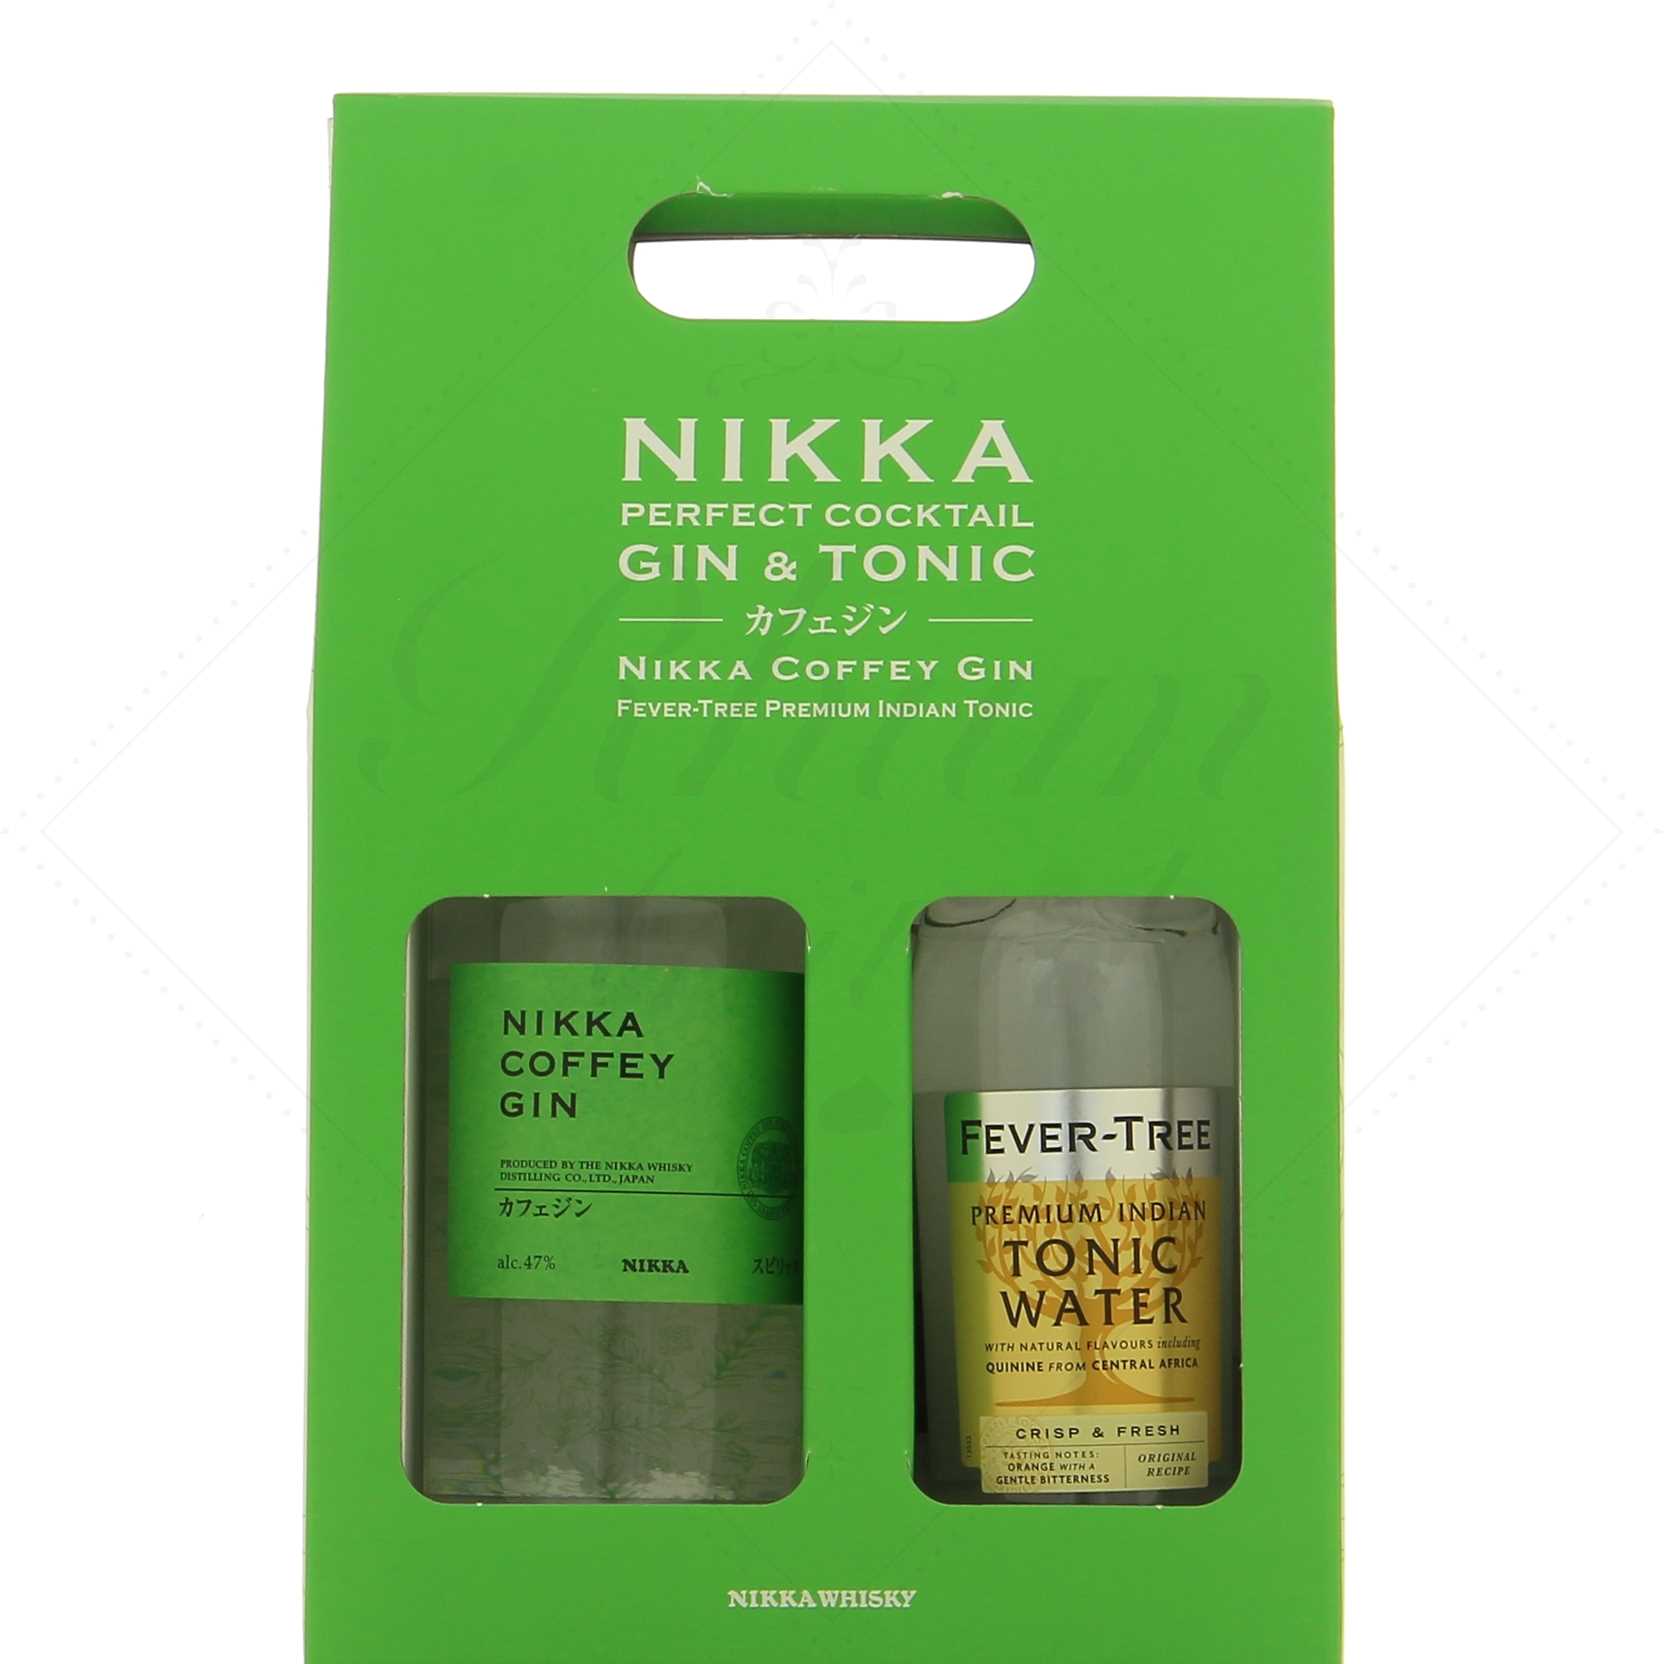 Nikka Gin Tonic Box - Gin & Tonica Fever-Tree 50cl